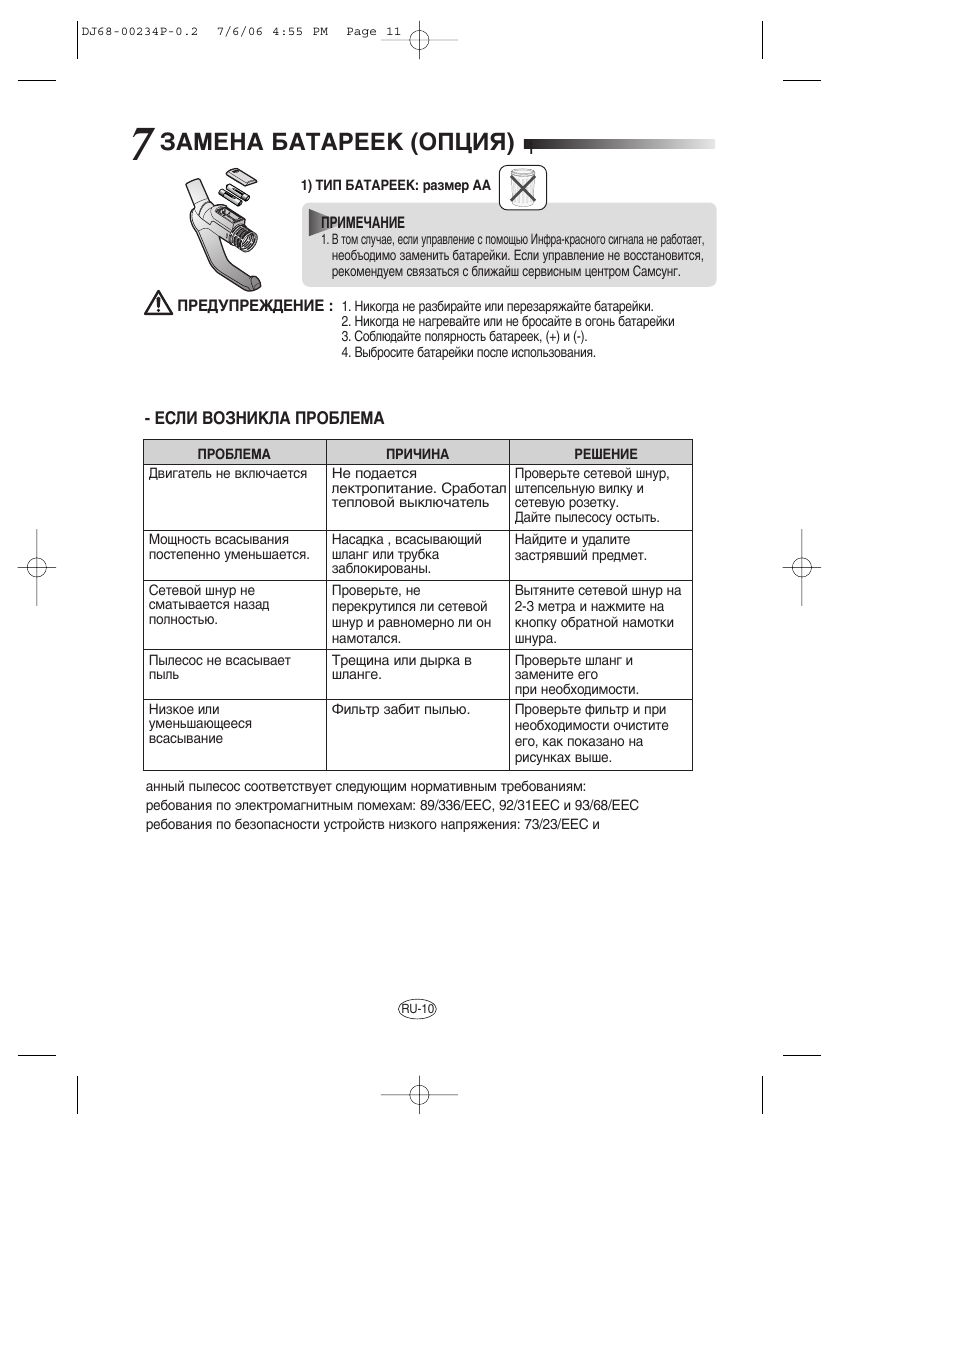 Бдецзд едндкццд (йисаь) | Samsung SC7840 User Manual | Page 11 / 56